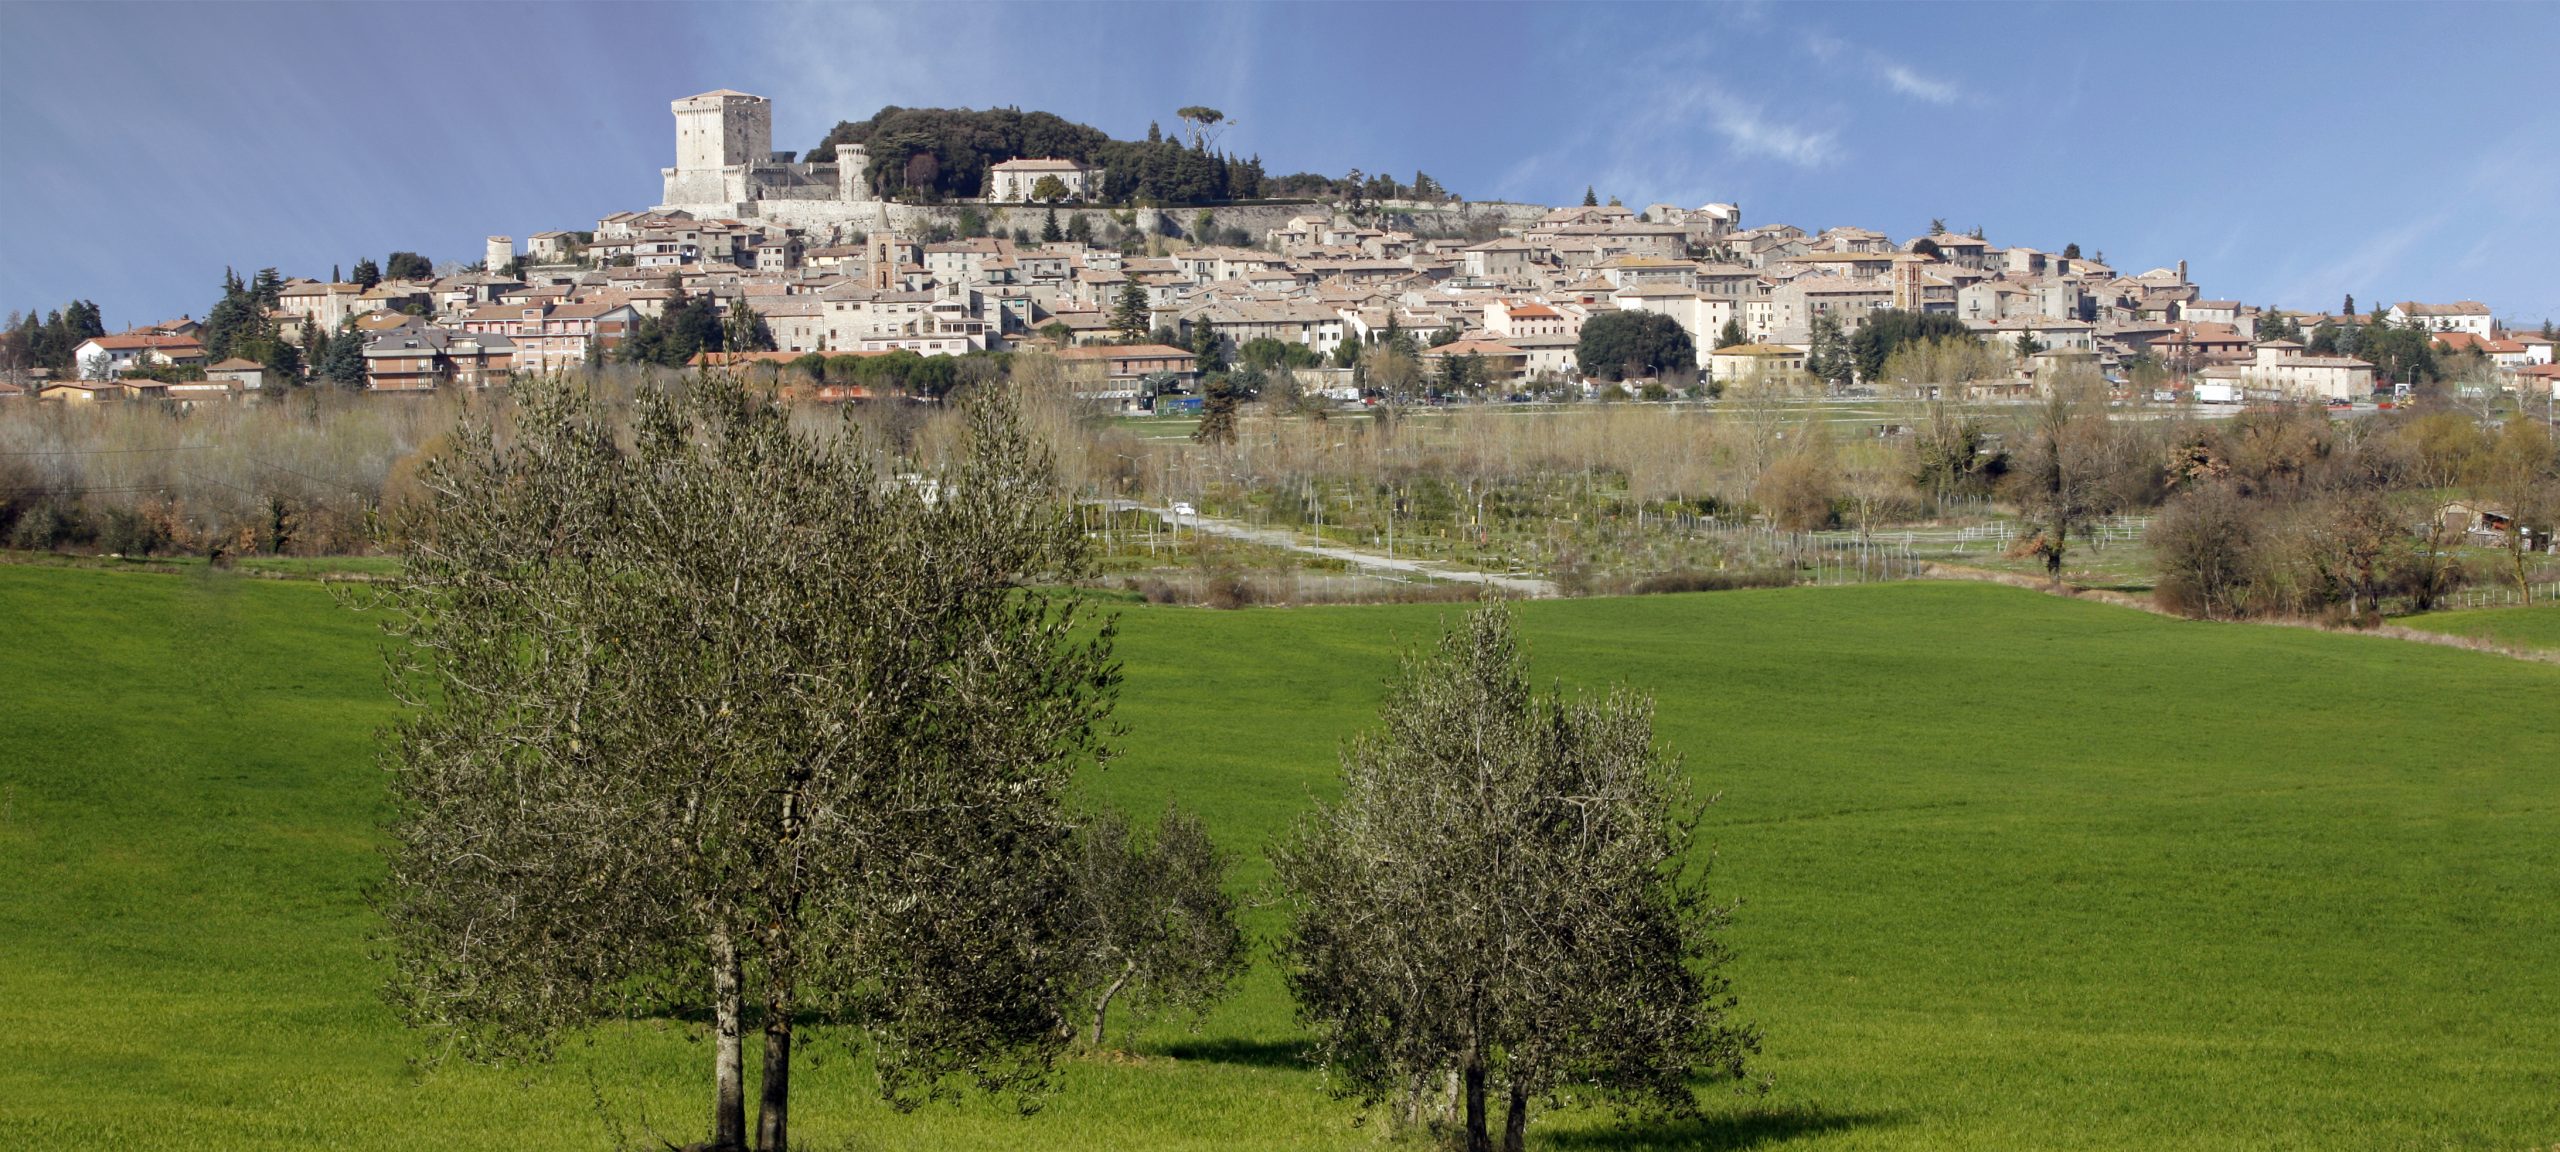 Sarteano Panorama Lib Comune.jpg